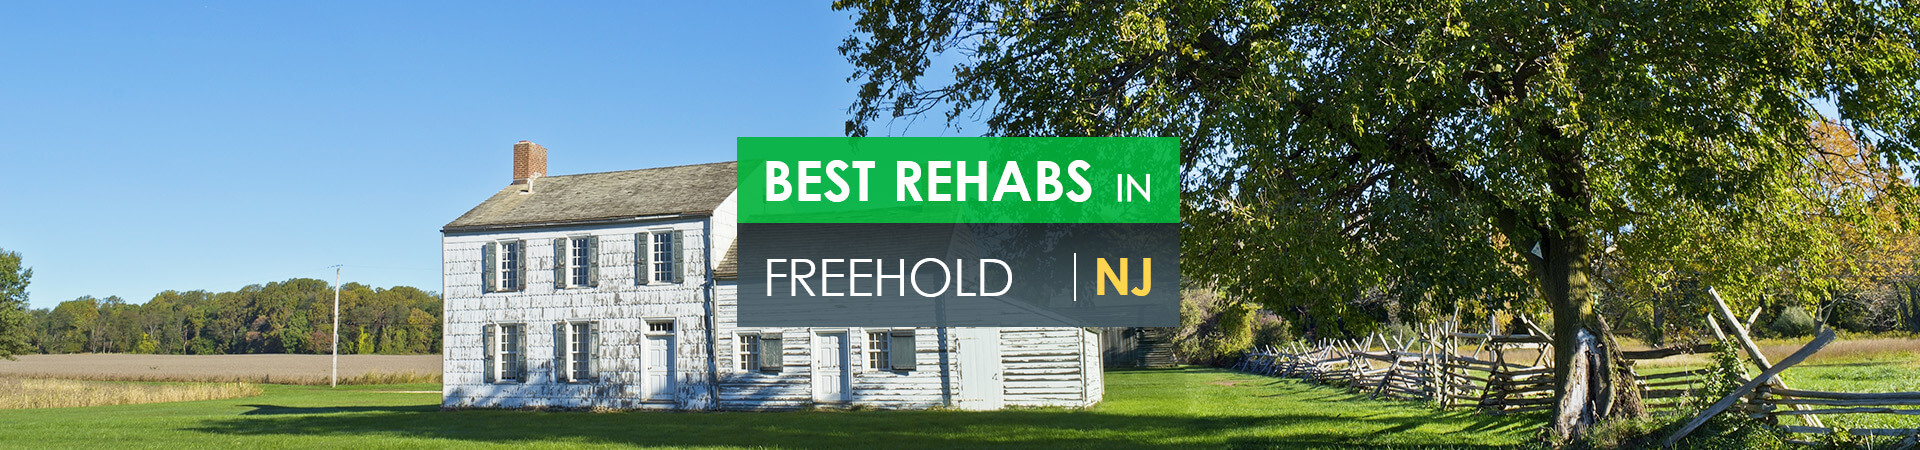 Best rehabs in Freehold, NJ